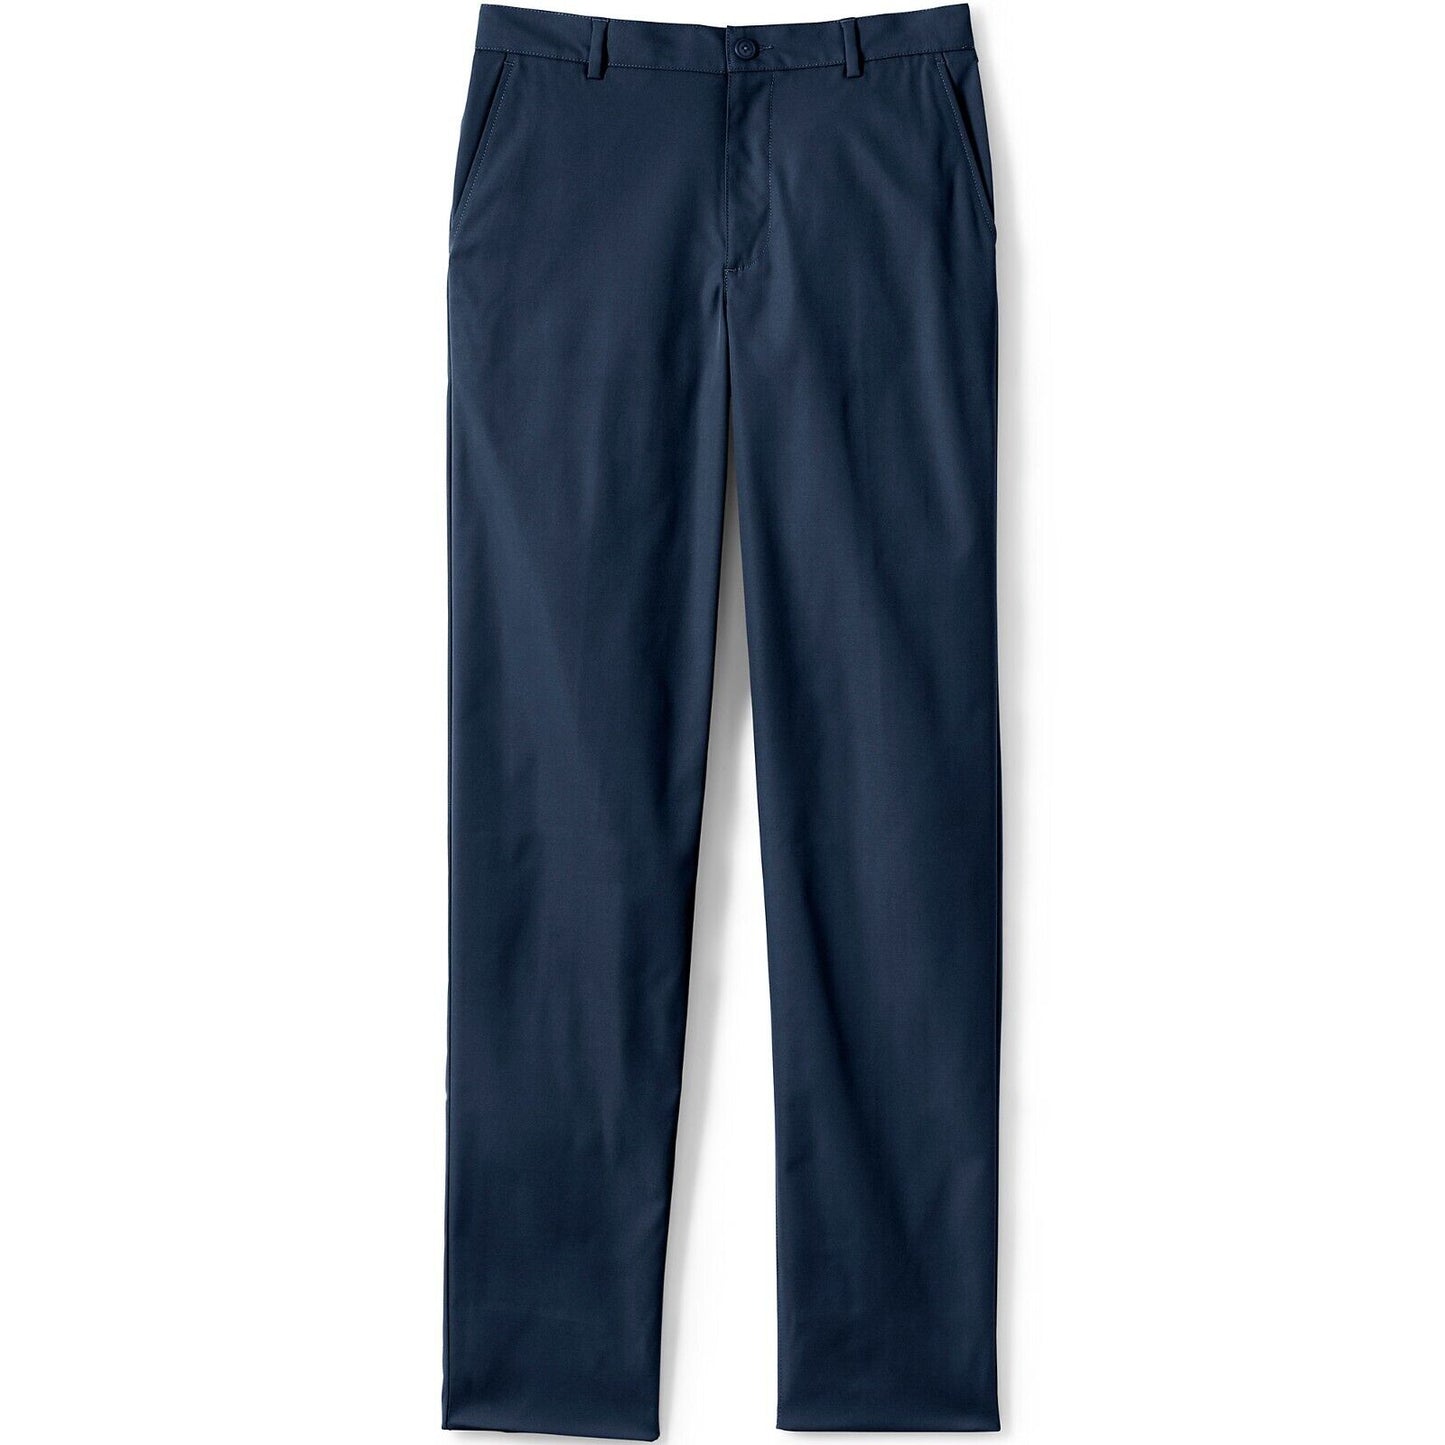 Men's Active Chino Pants size 35